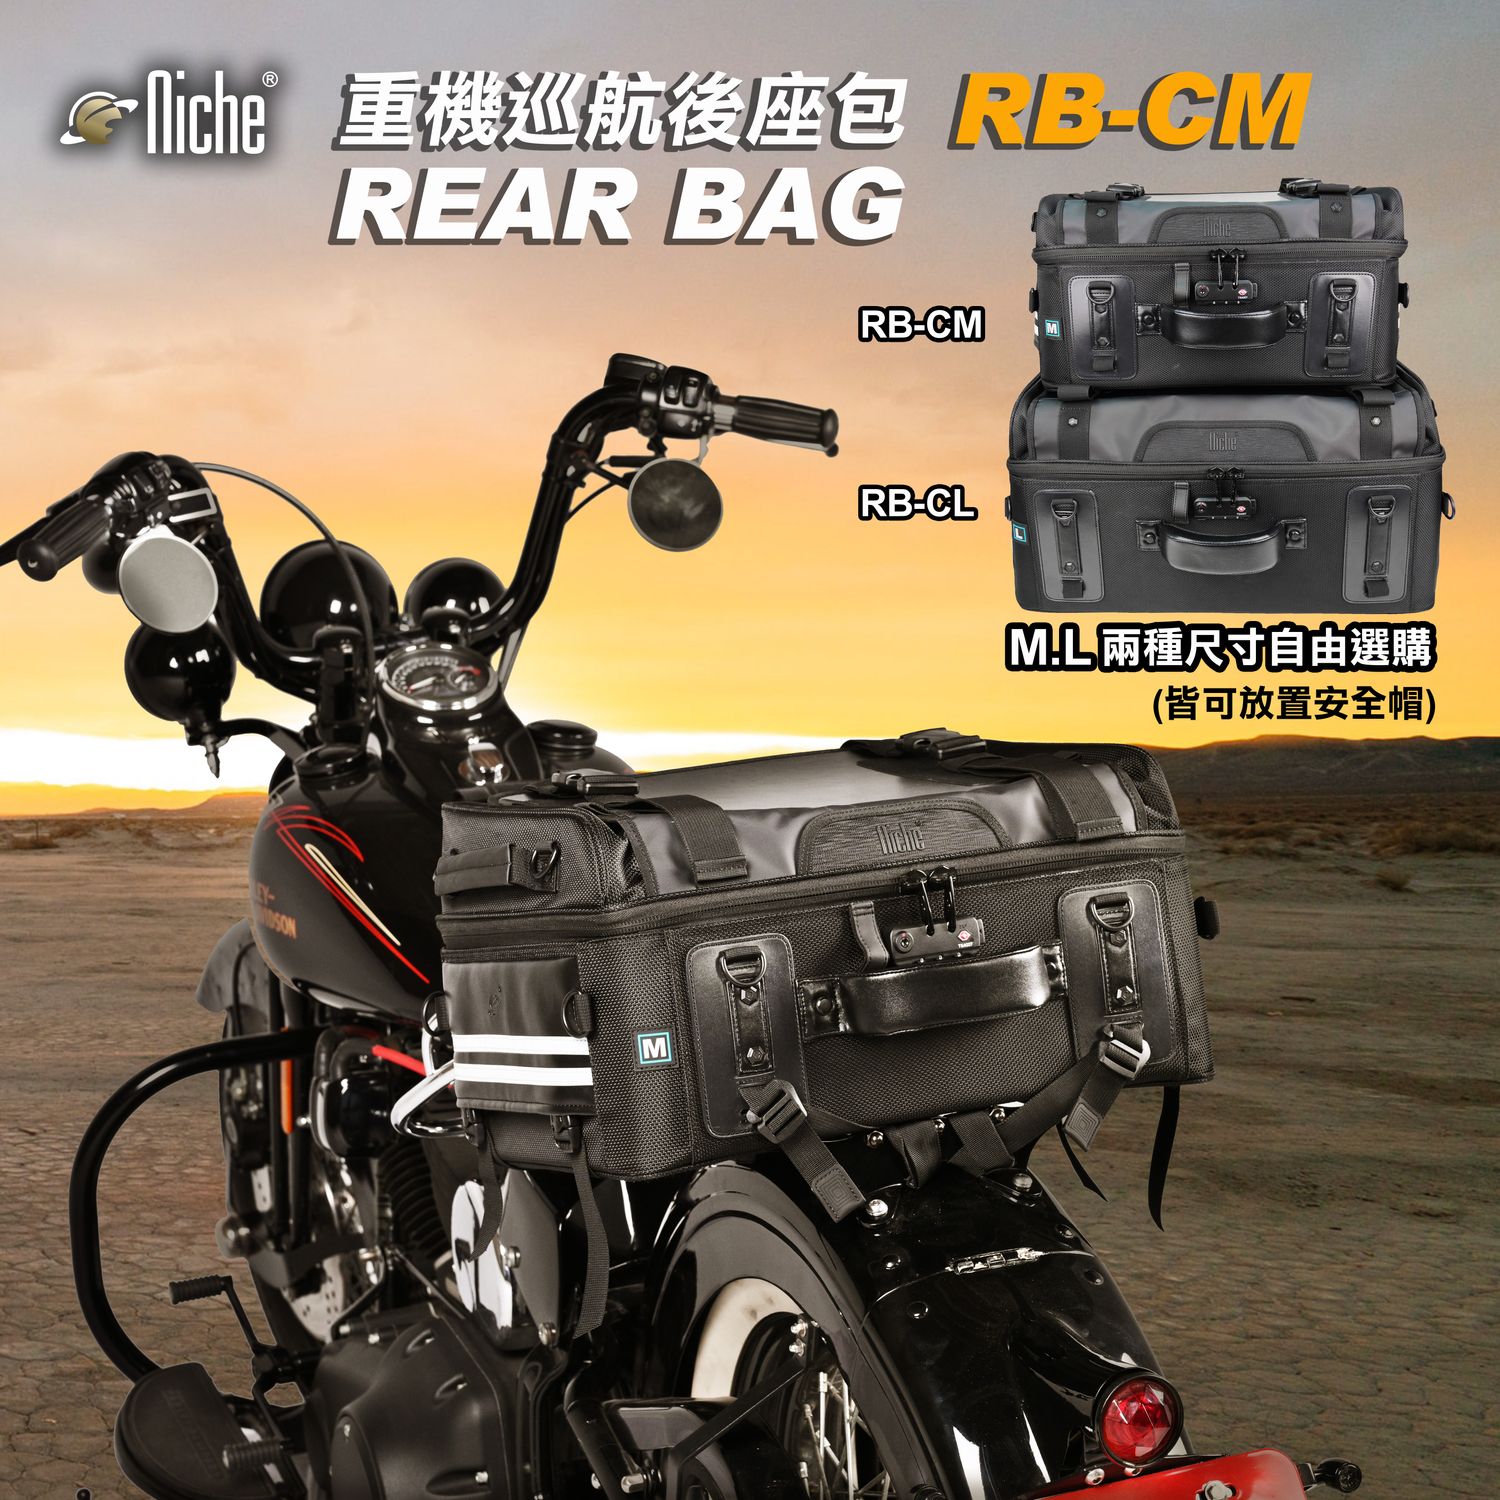 Niche 樂奇-摩托車專用包|工具收納袋與攜帶系統|都會行旅後背包與配件包 - 重機頭盔後座包 時尚帥氣